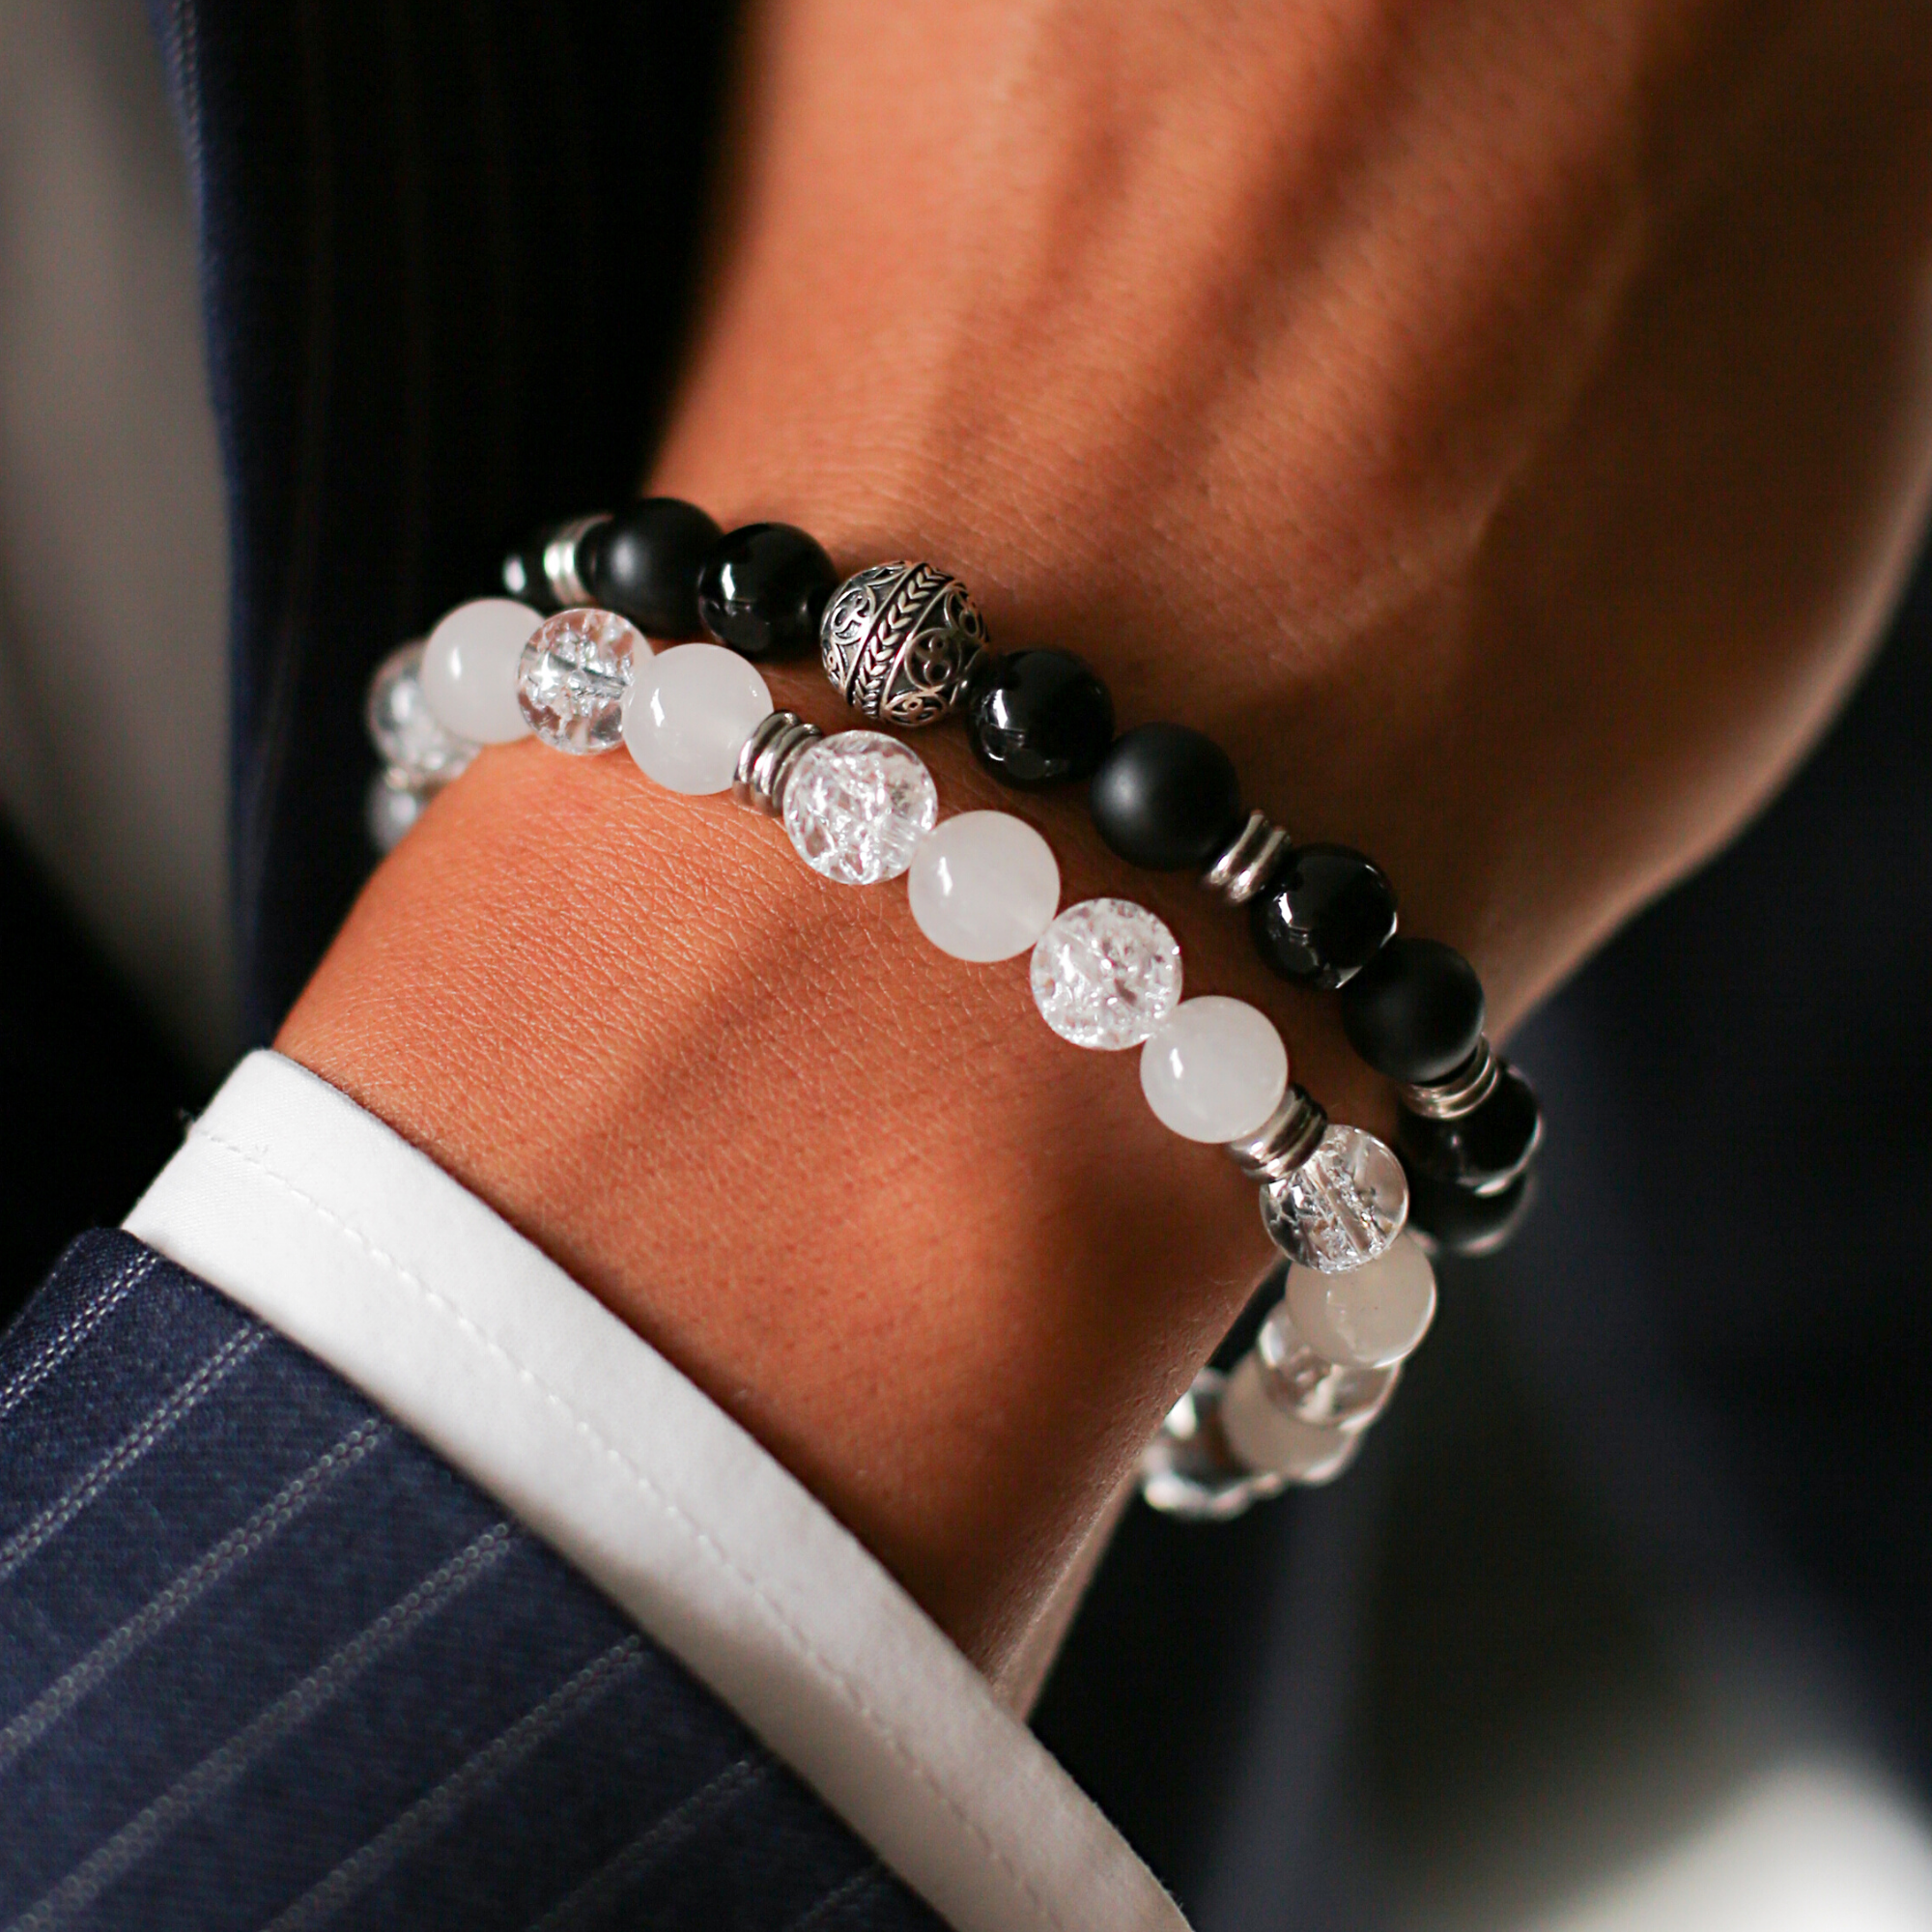 Men's Bead Bracelet Designs To Overwhelm Your Fashion Senses – The